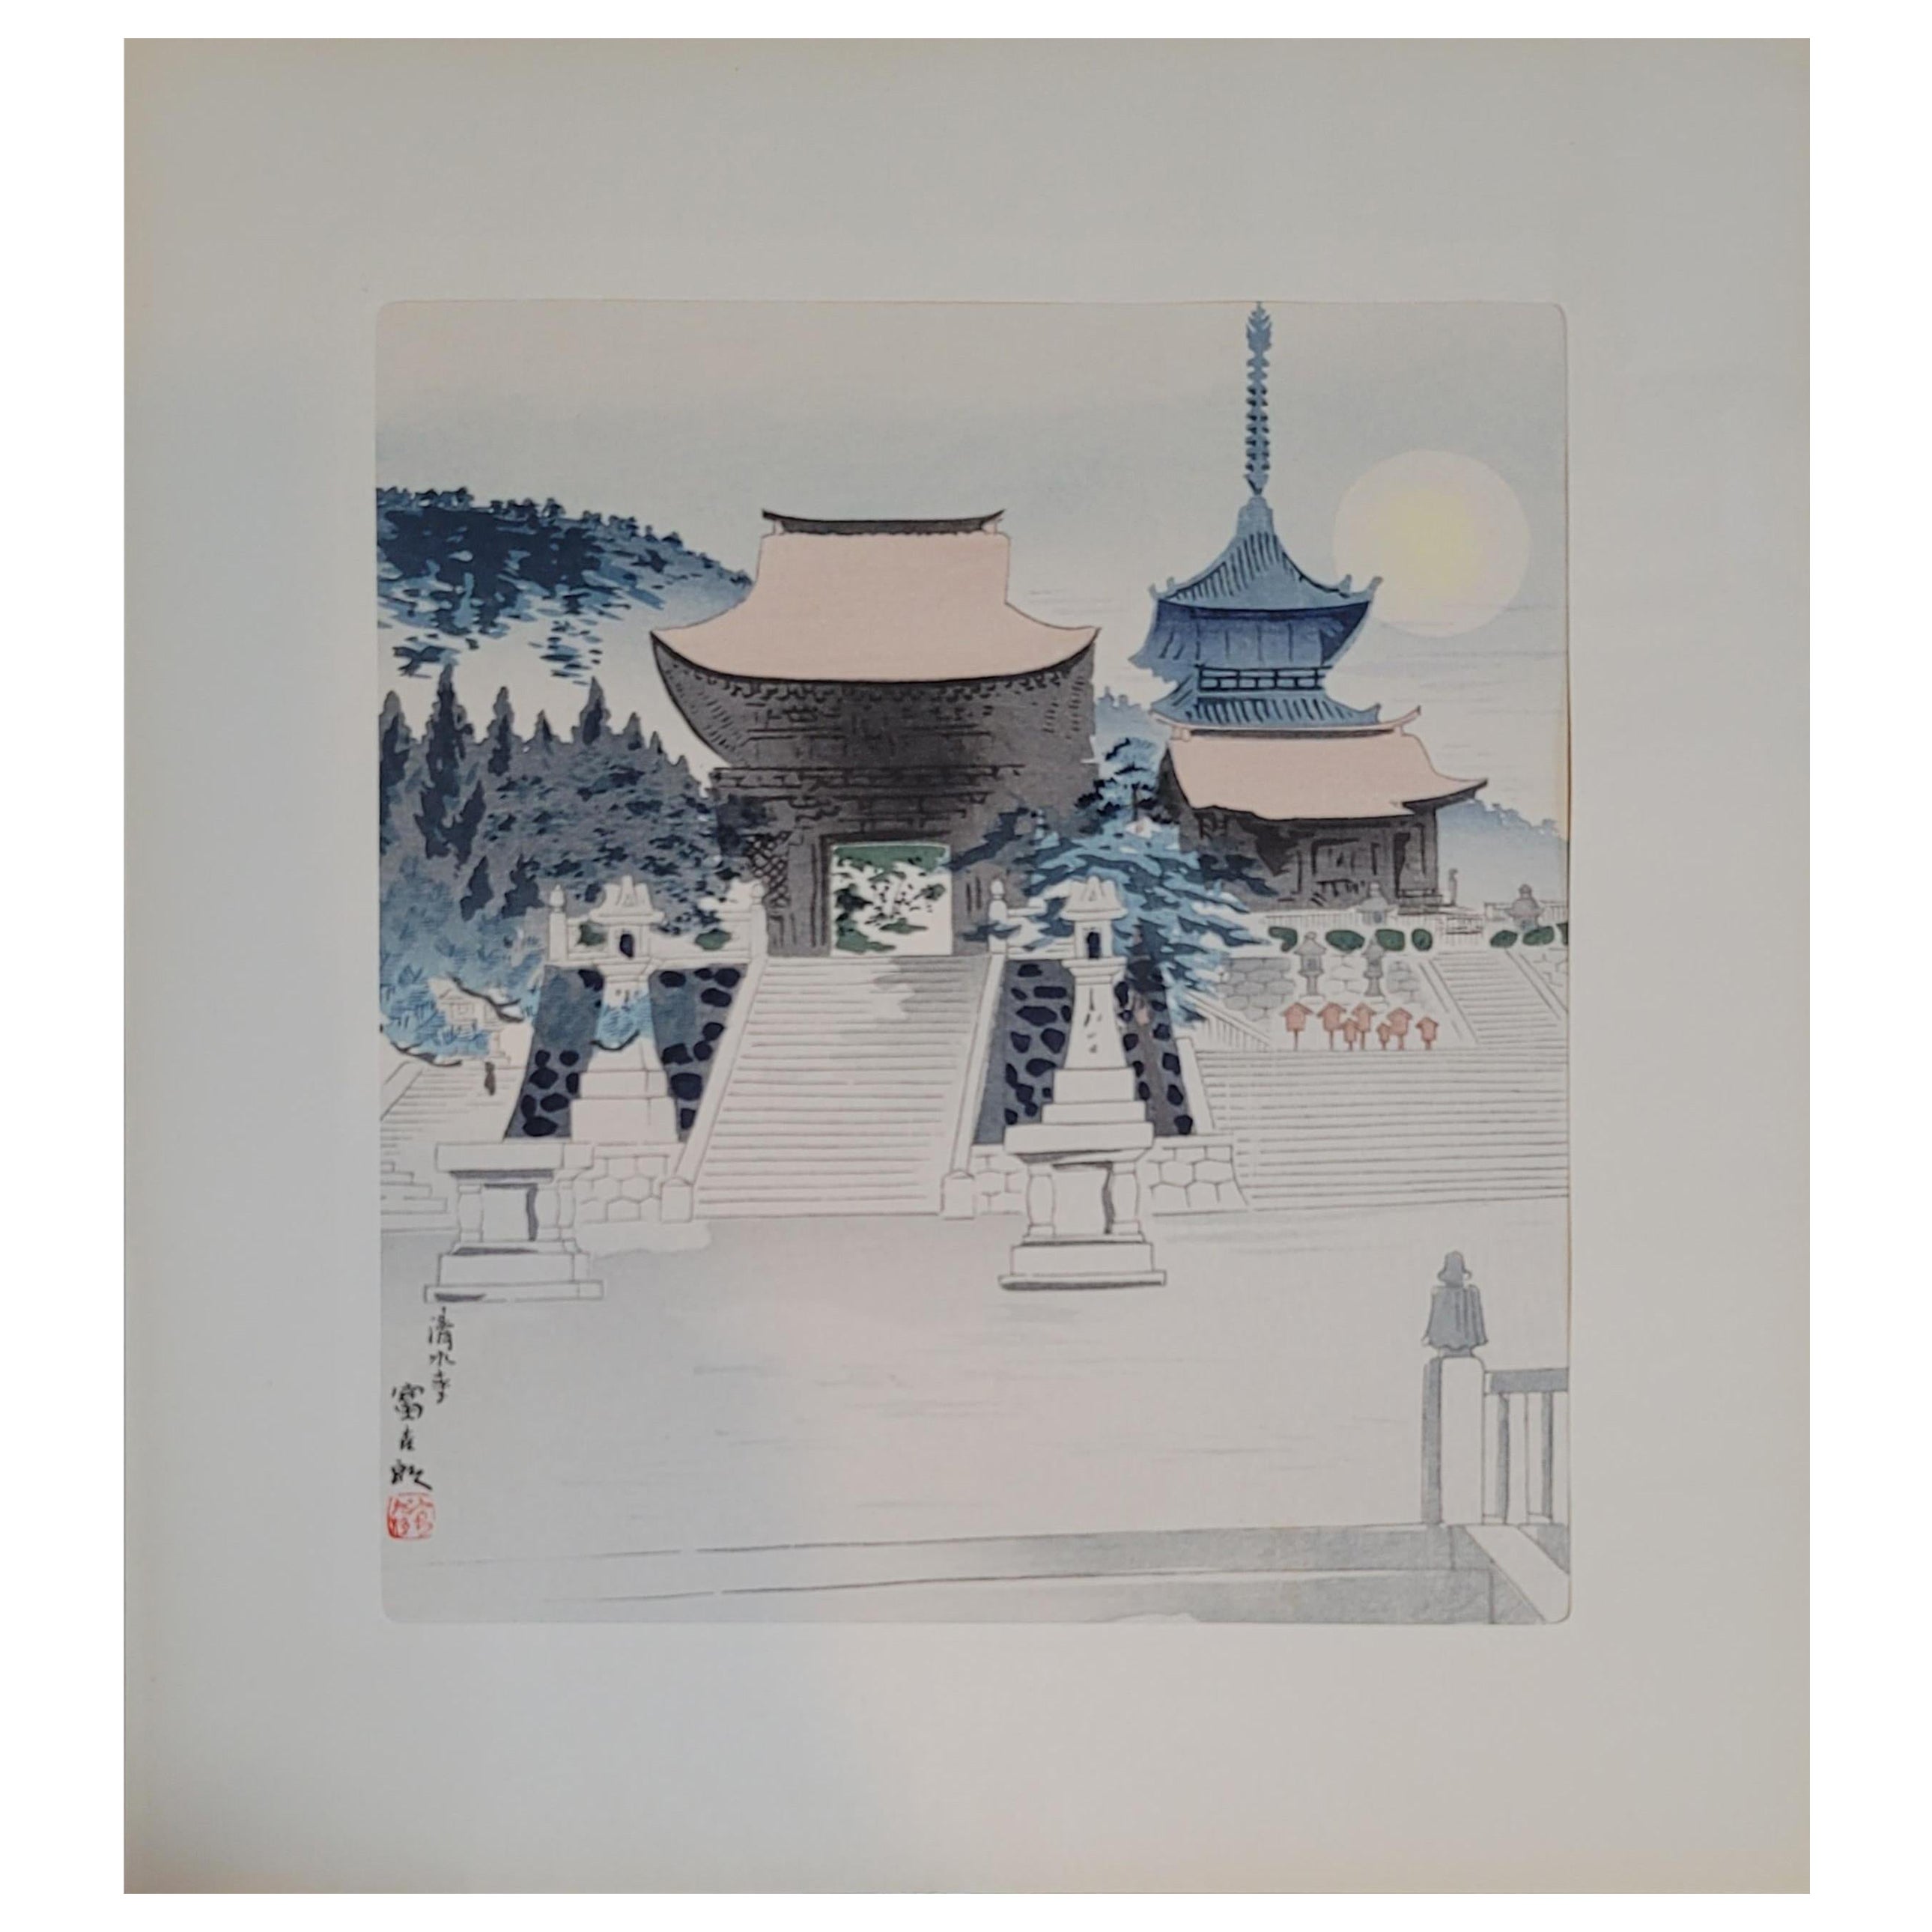 Japanischer Holzschnitt mit Holzschnitt von Tomikichiro Tokuriki, 1902-1999